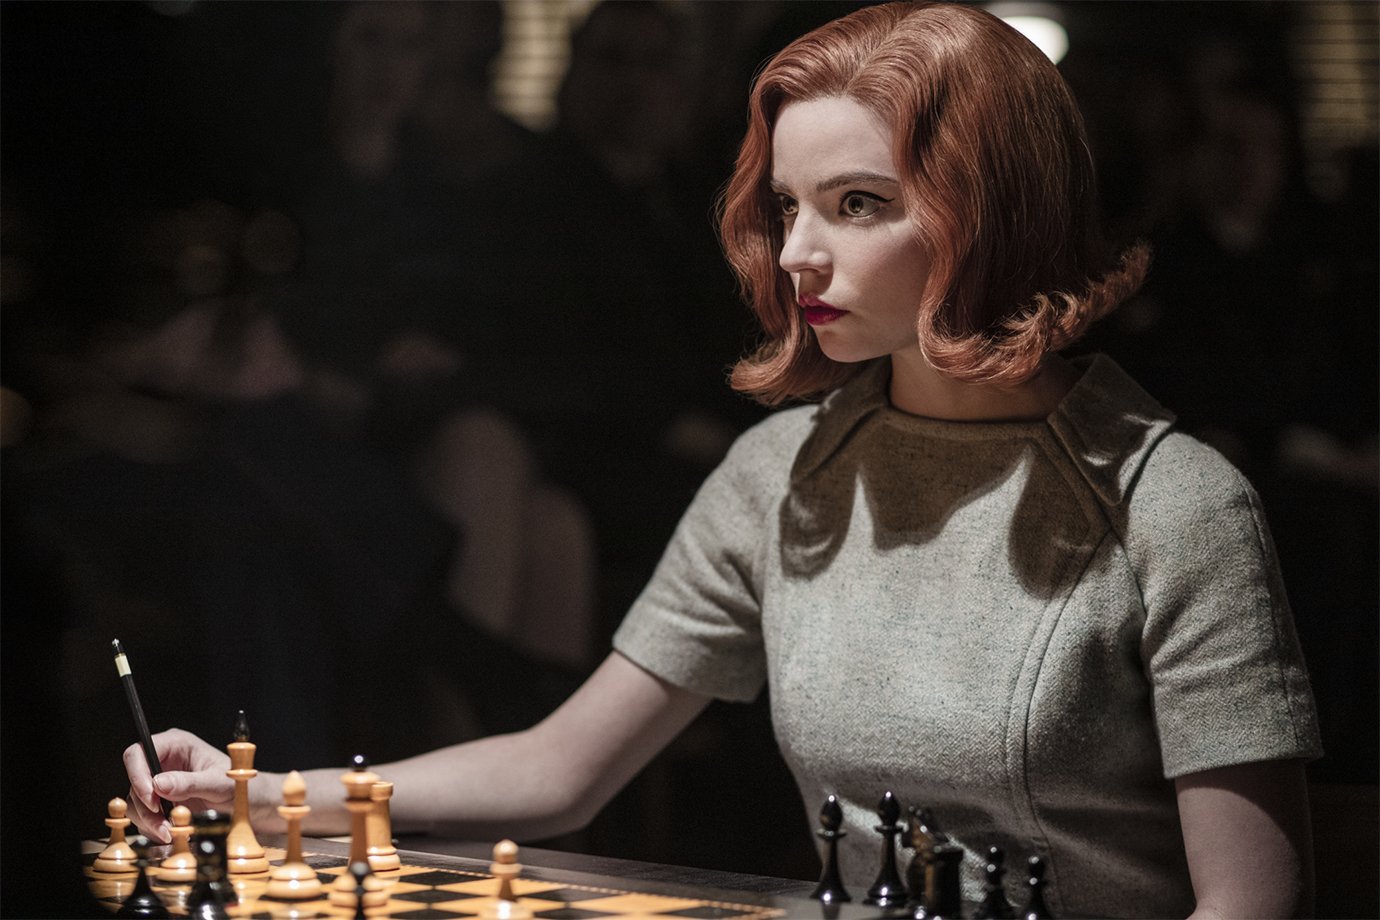 Efeito Netflix: “O Gambito da Rainha” aumenta interesse por xadrez online